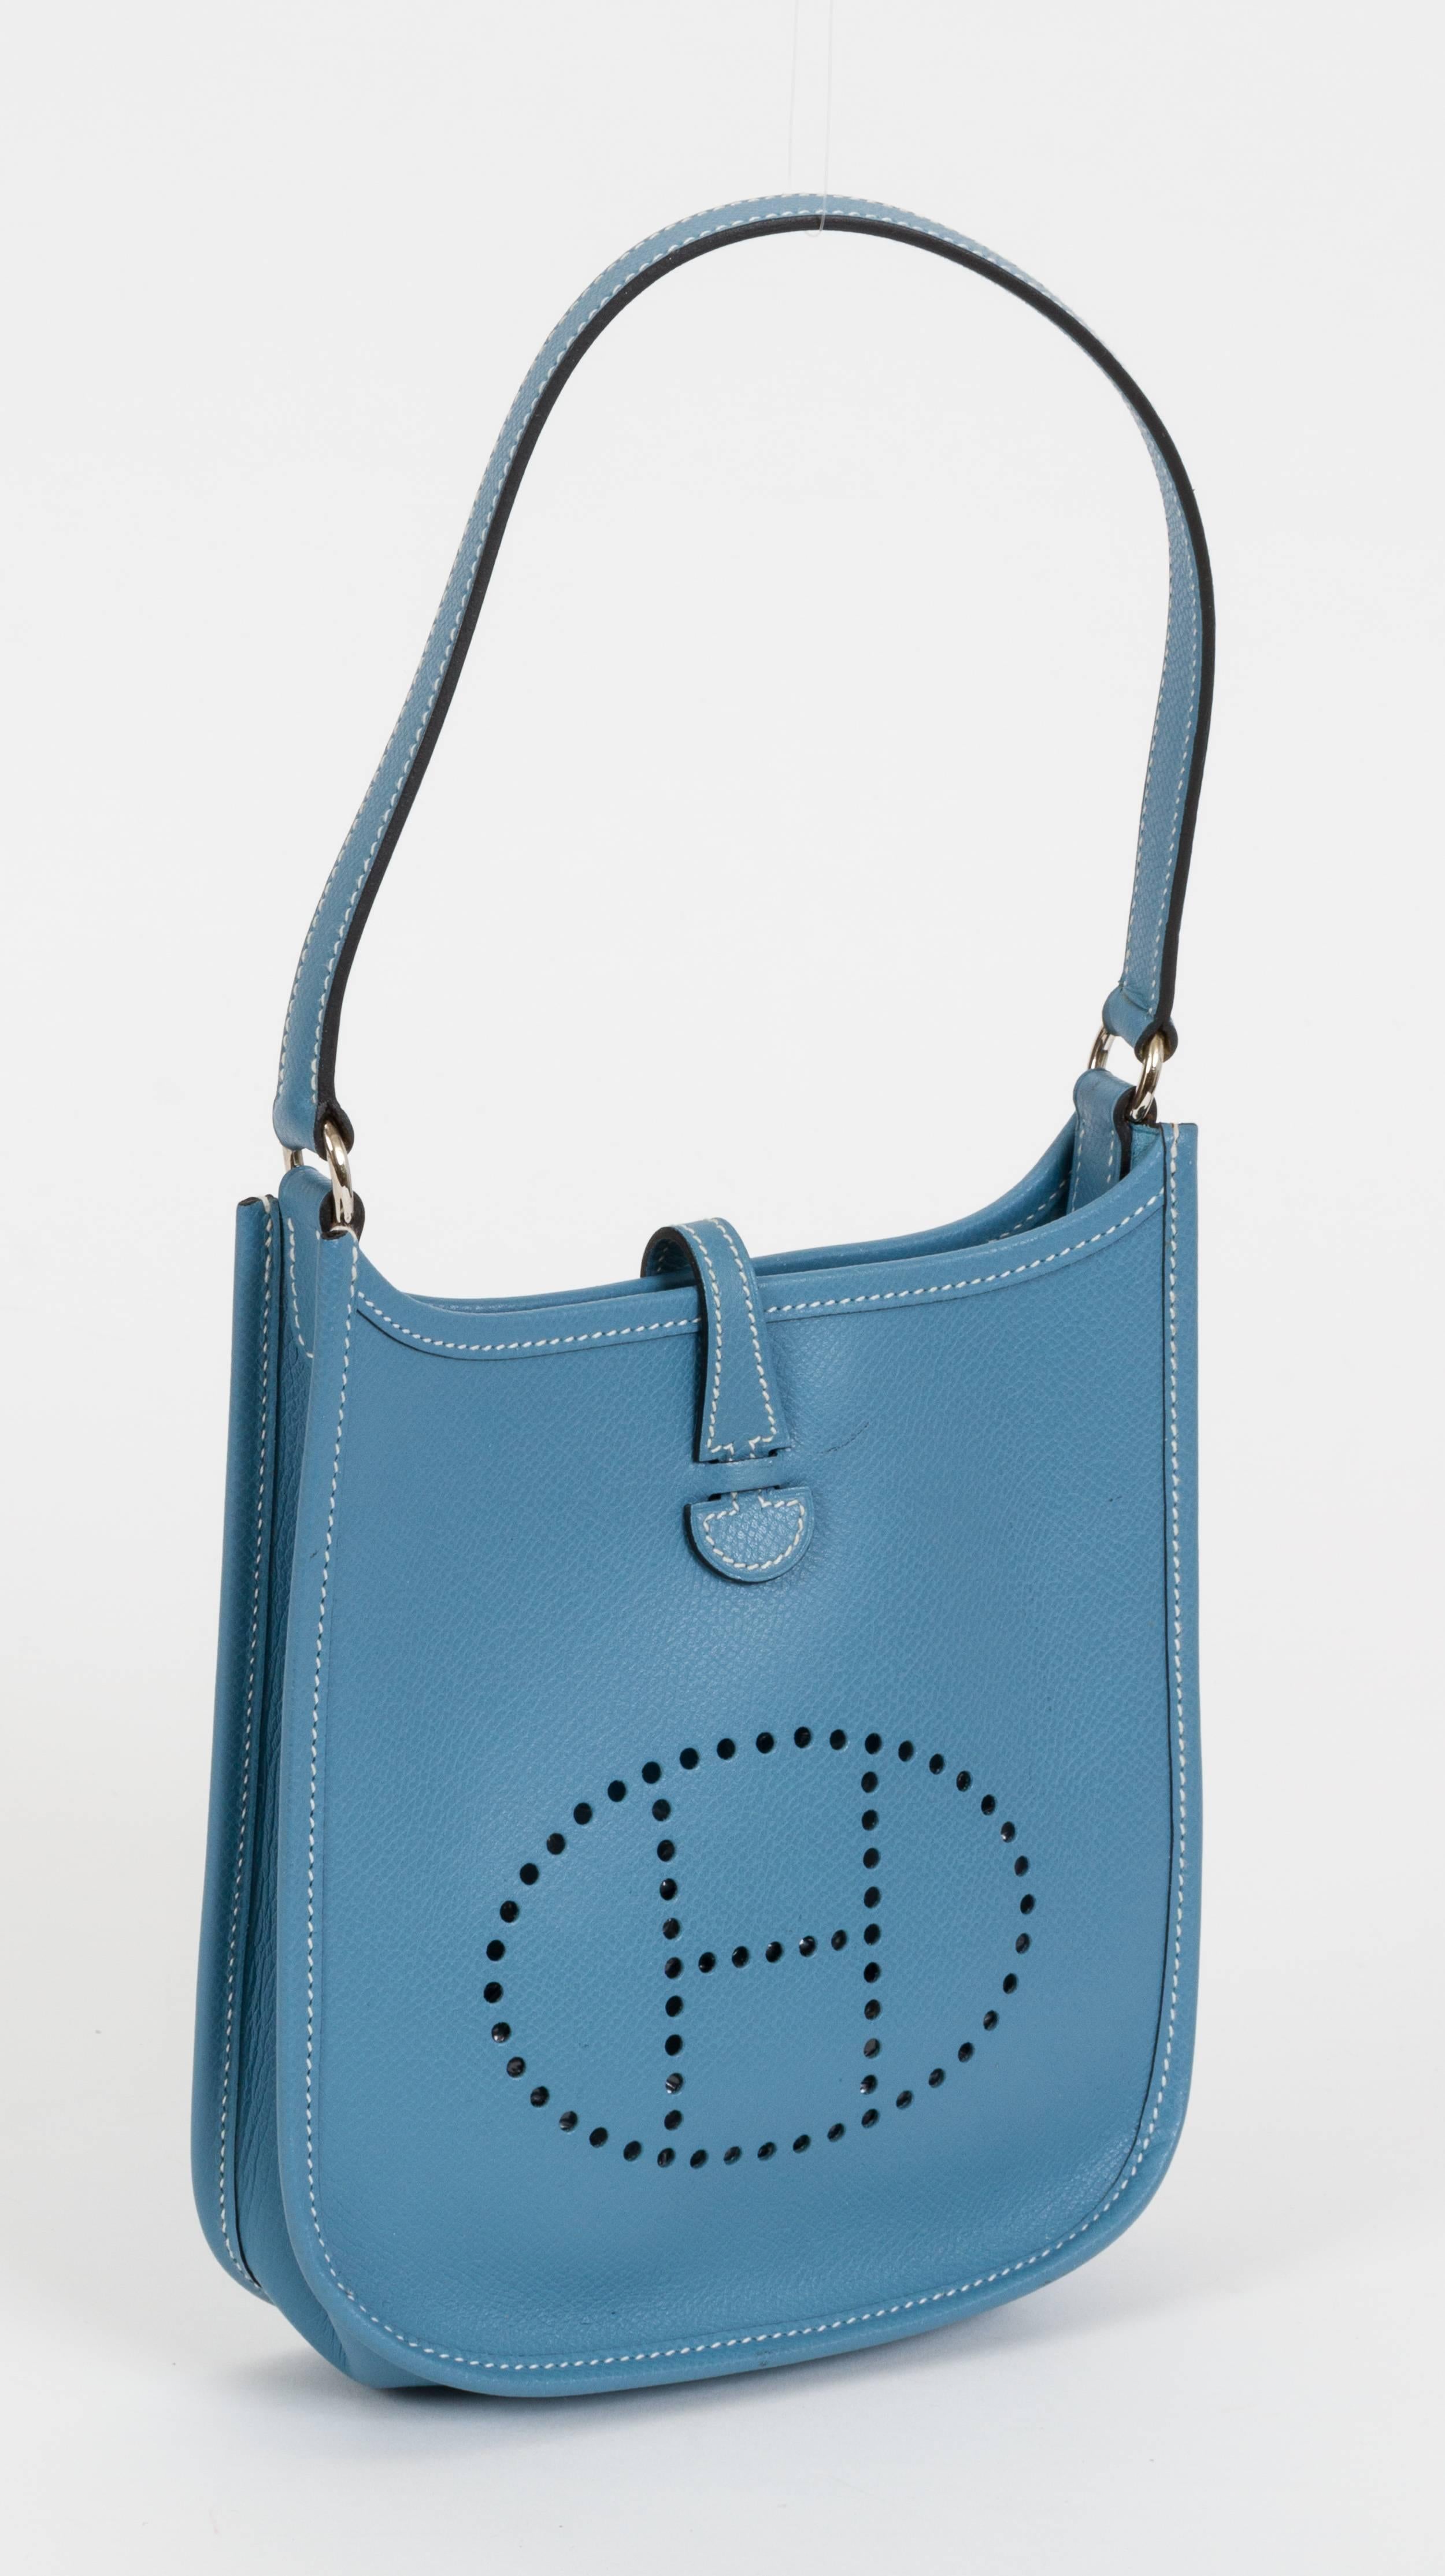 Hermès Evelyne mini shoulder bag in blue jean Epsom leather with palladium hardware. Date stamp 